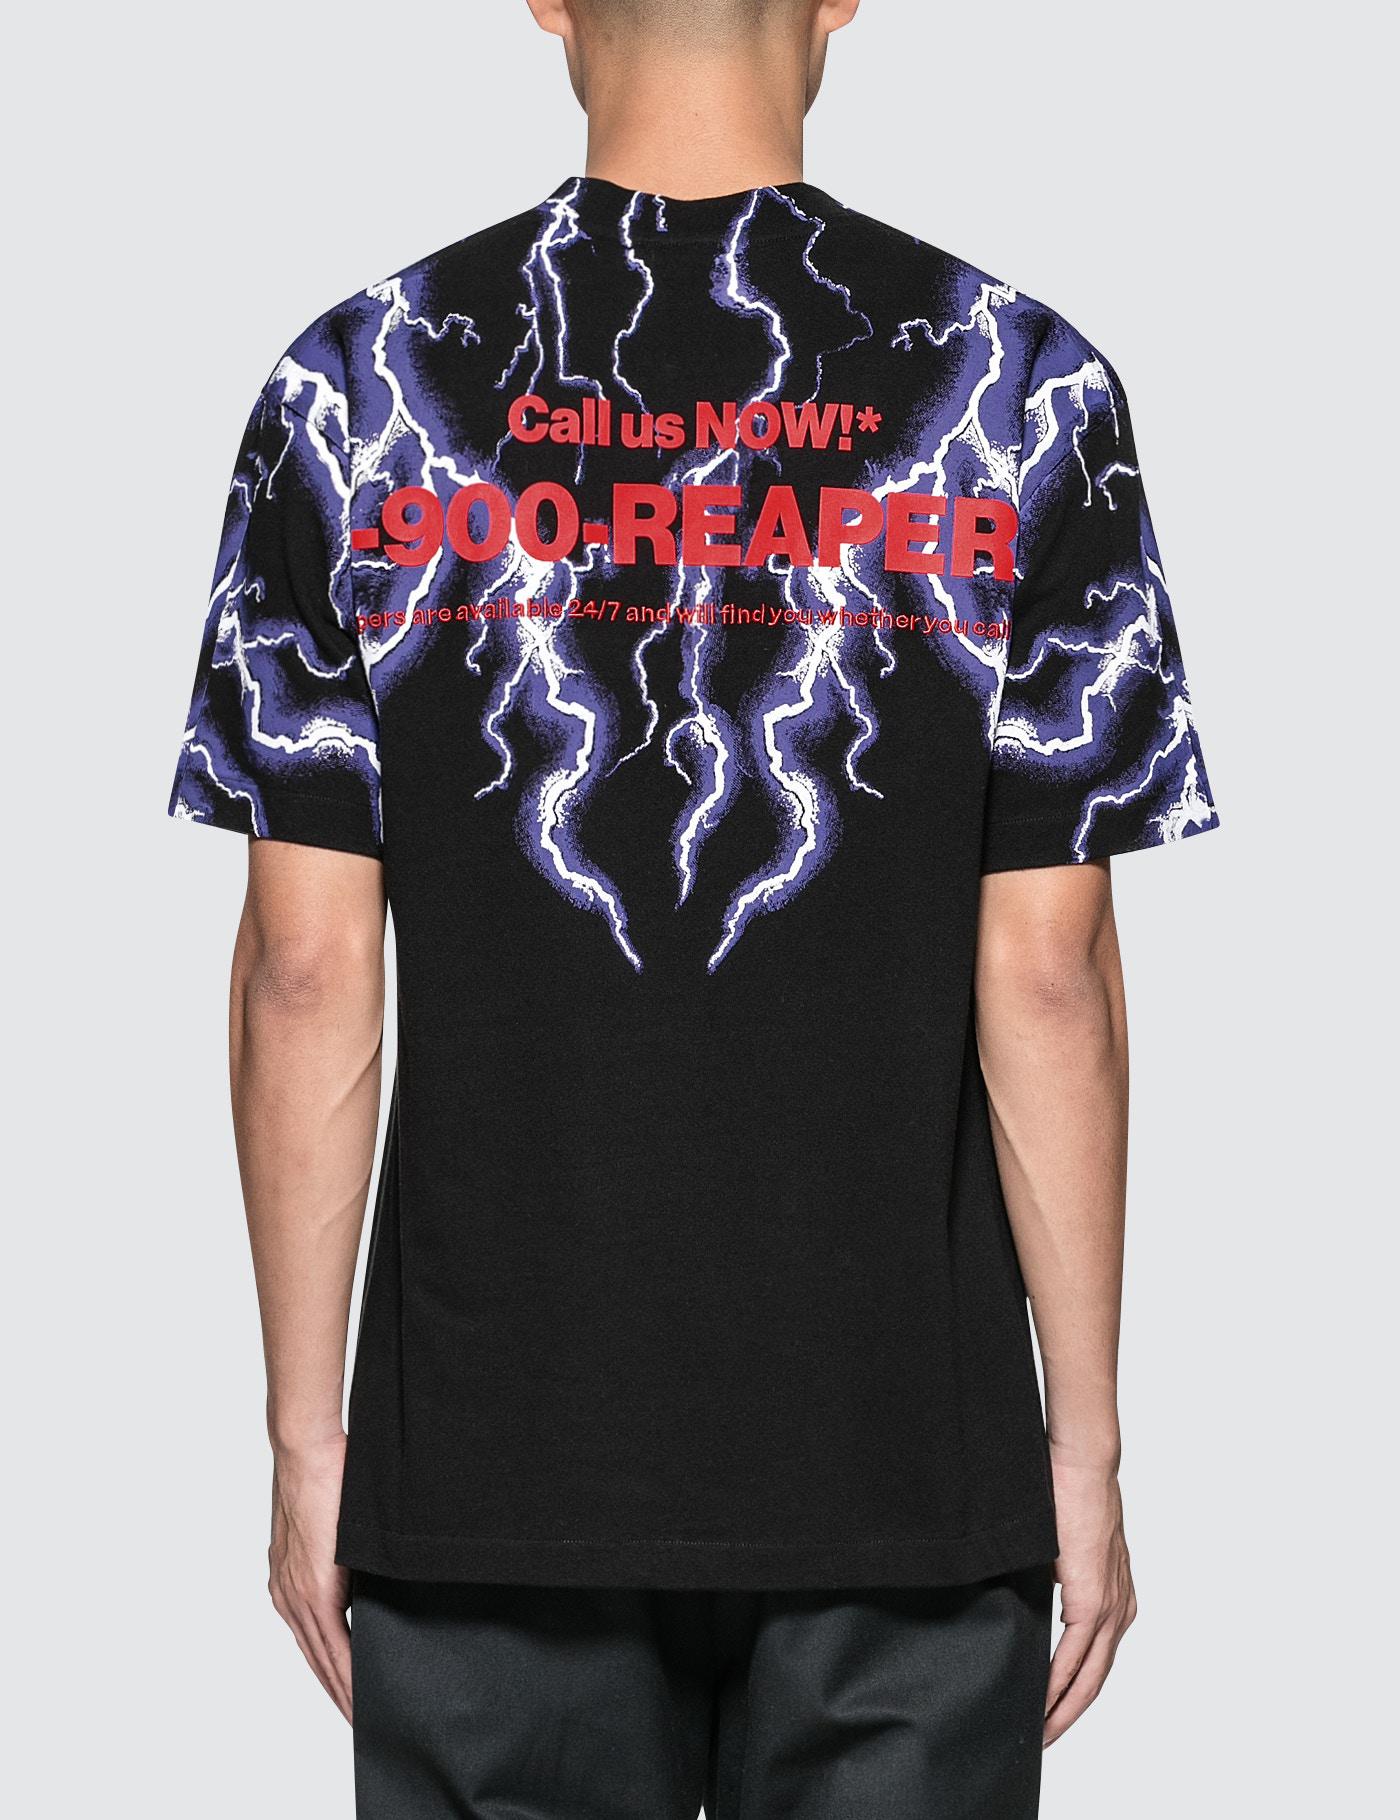 Alexander Wang Cotton Lightning Collage T-shirt in Black for Men - Lyst